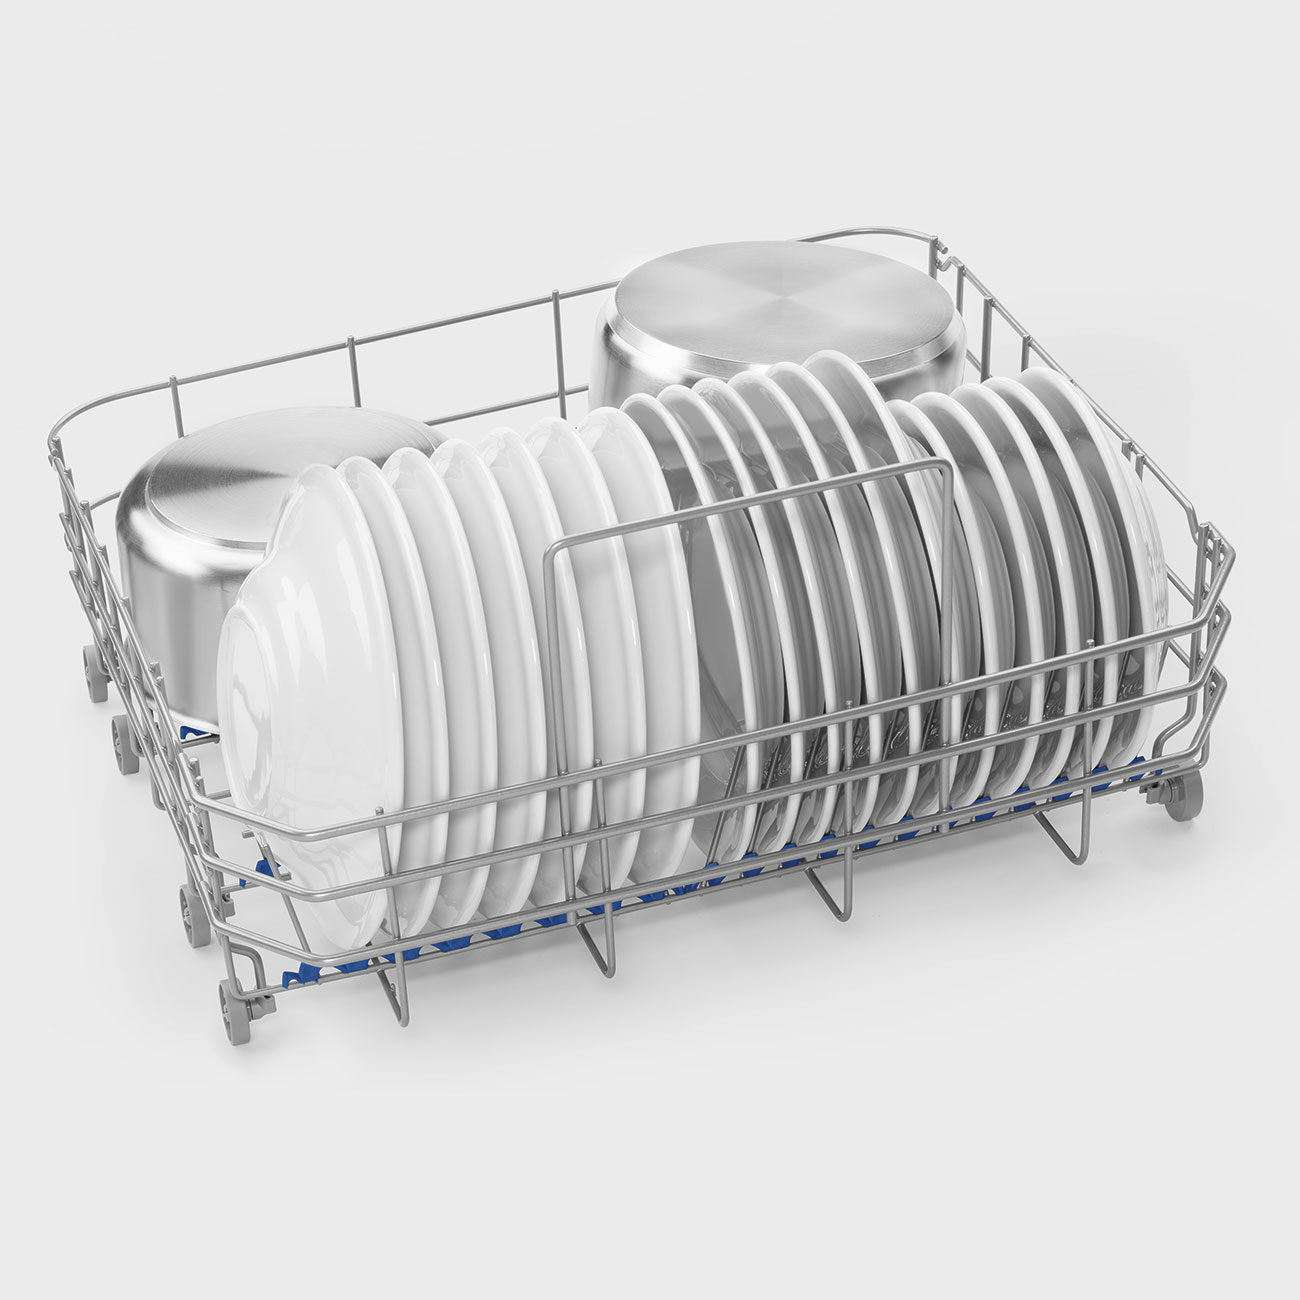 Fully-integrated built-in dishwasher 60 cm Smeg_9